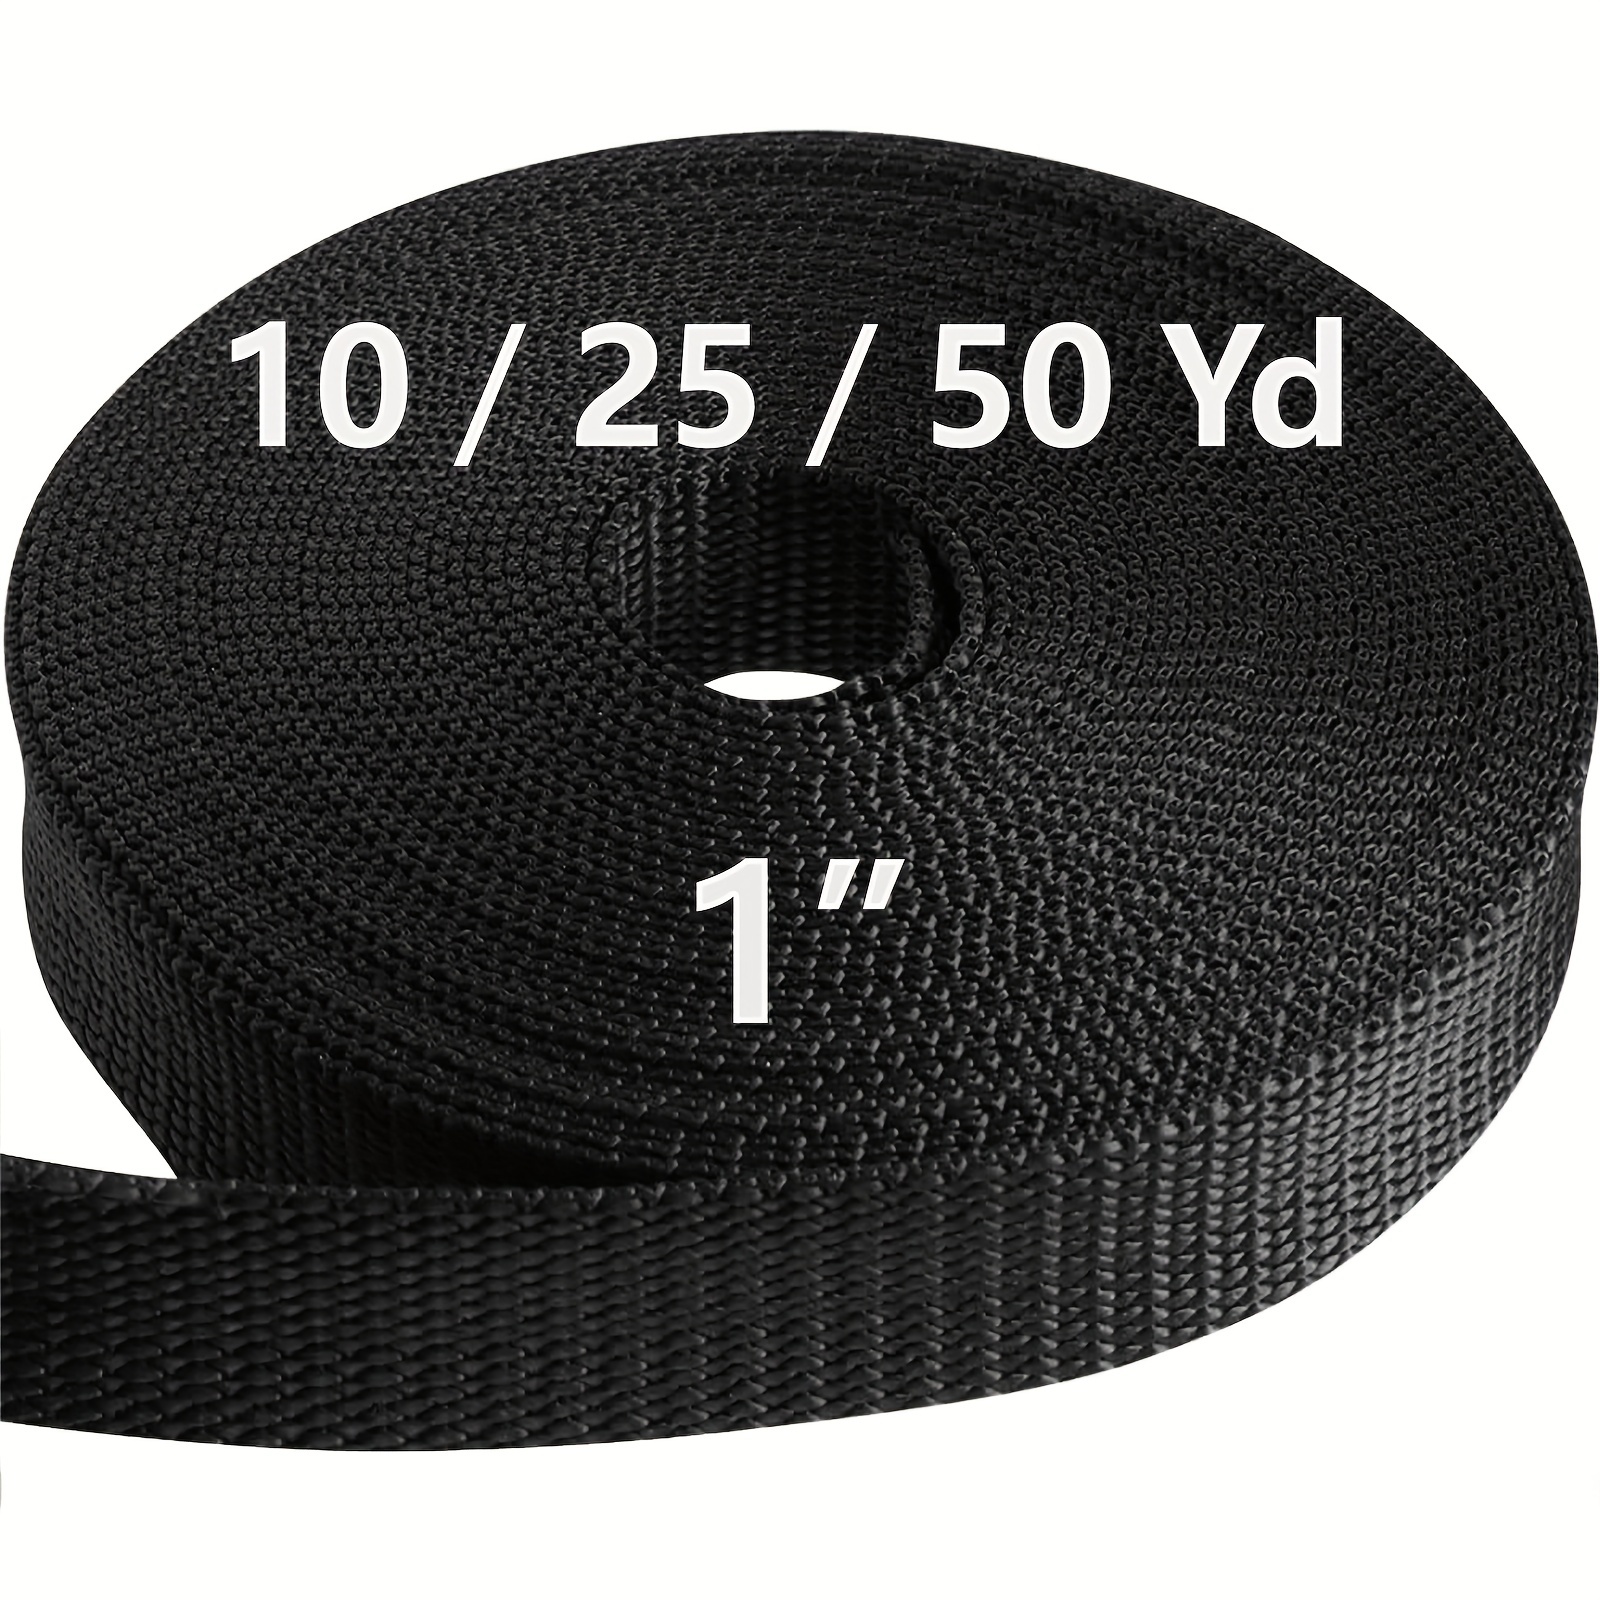 10 Yards 2 Inch Wide Black Nylon Heavy Duty Webbing Strap